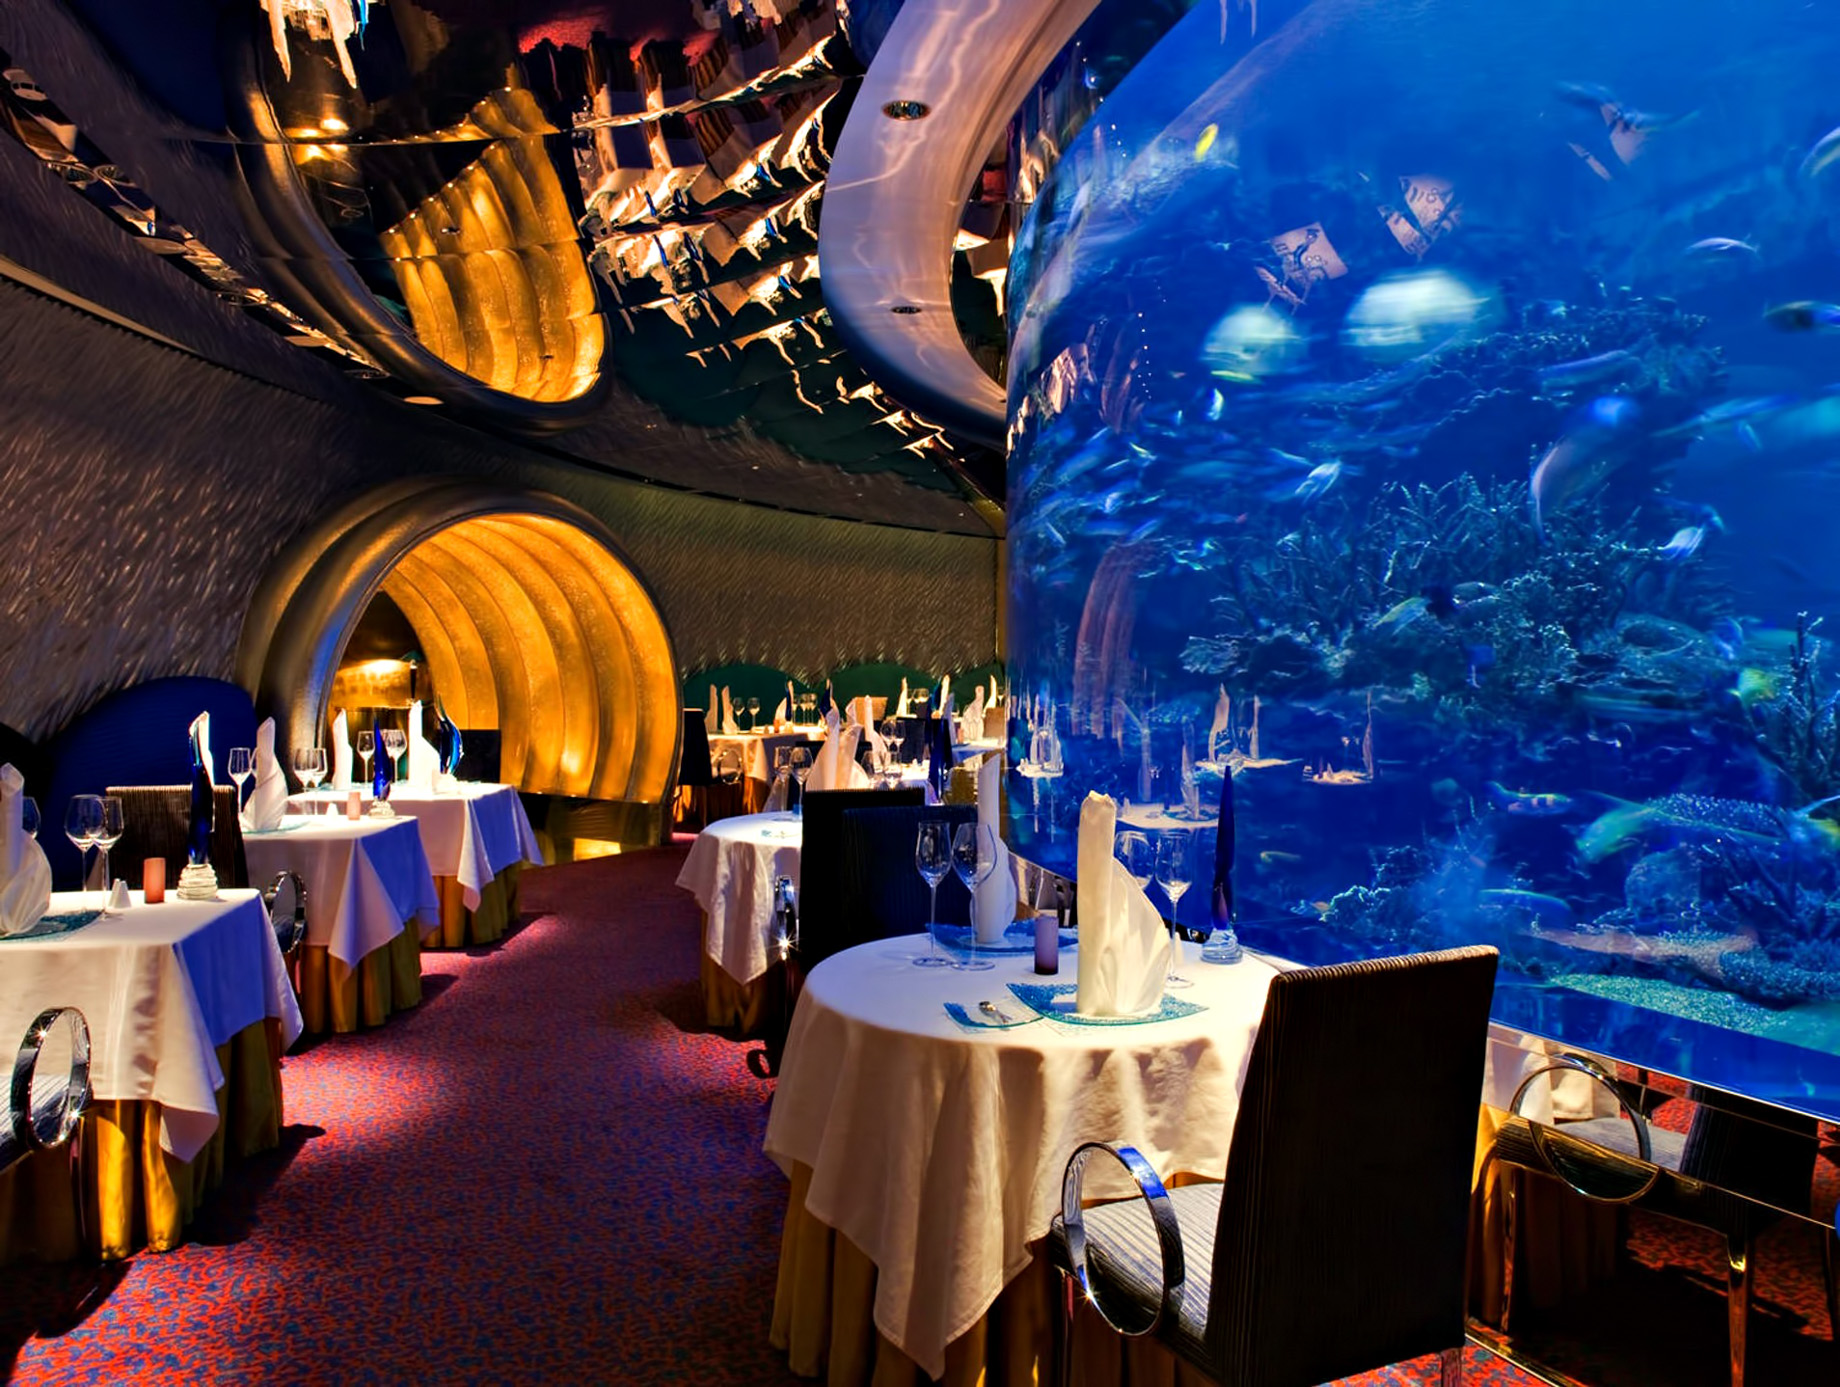 Burj Al Arab Jumeirah Hotel – Dubai, UAE – Al Mahara Restaurant Aquarium